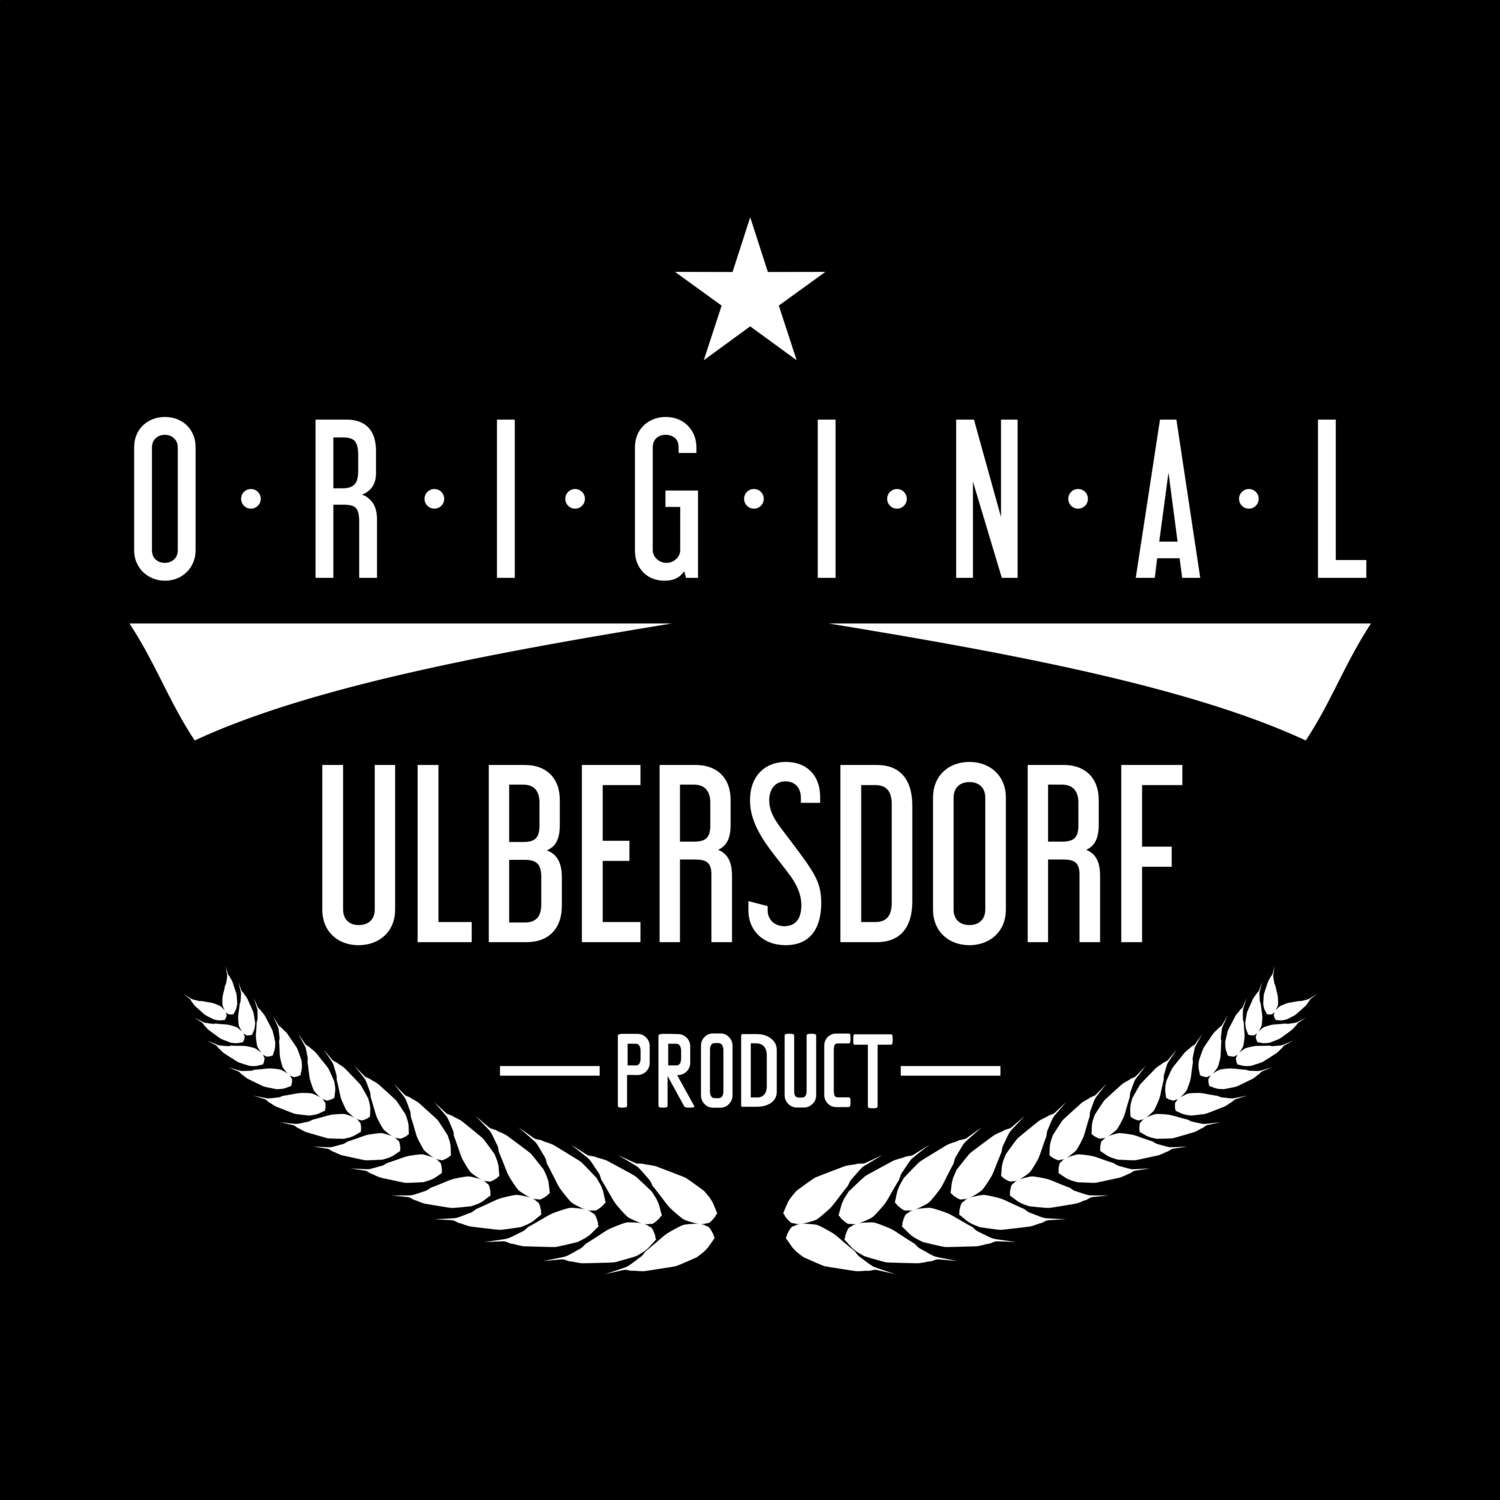 Ulbersdorf T-Shirt »Original Product«